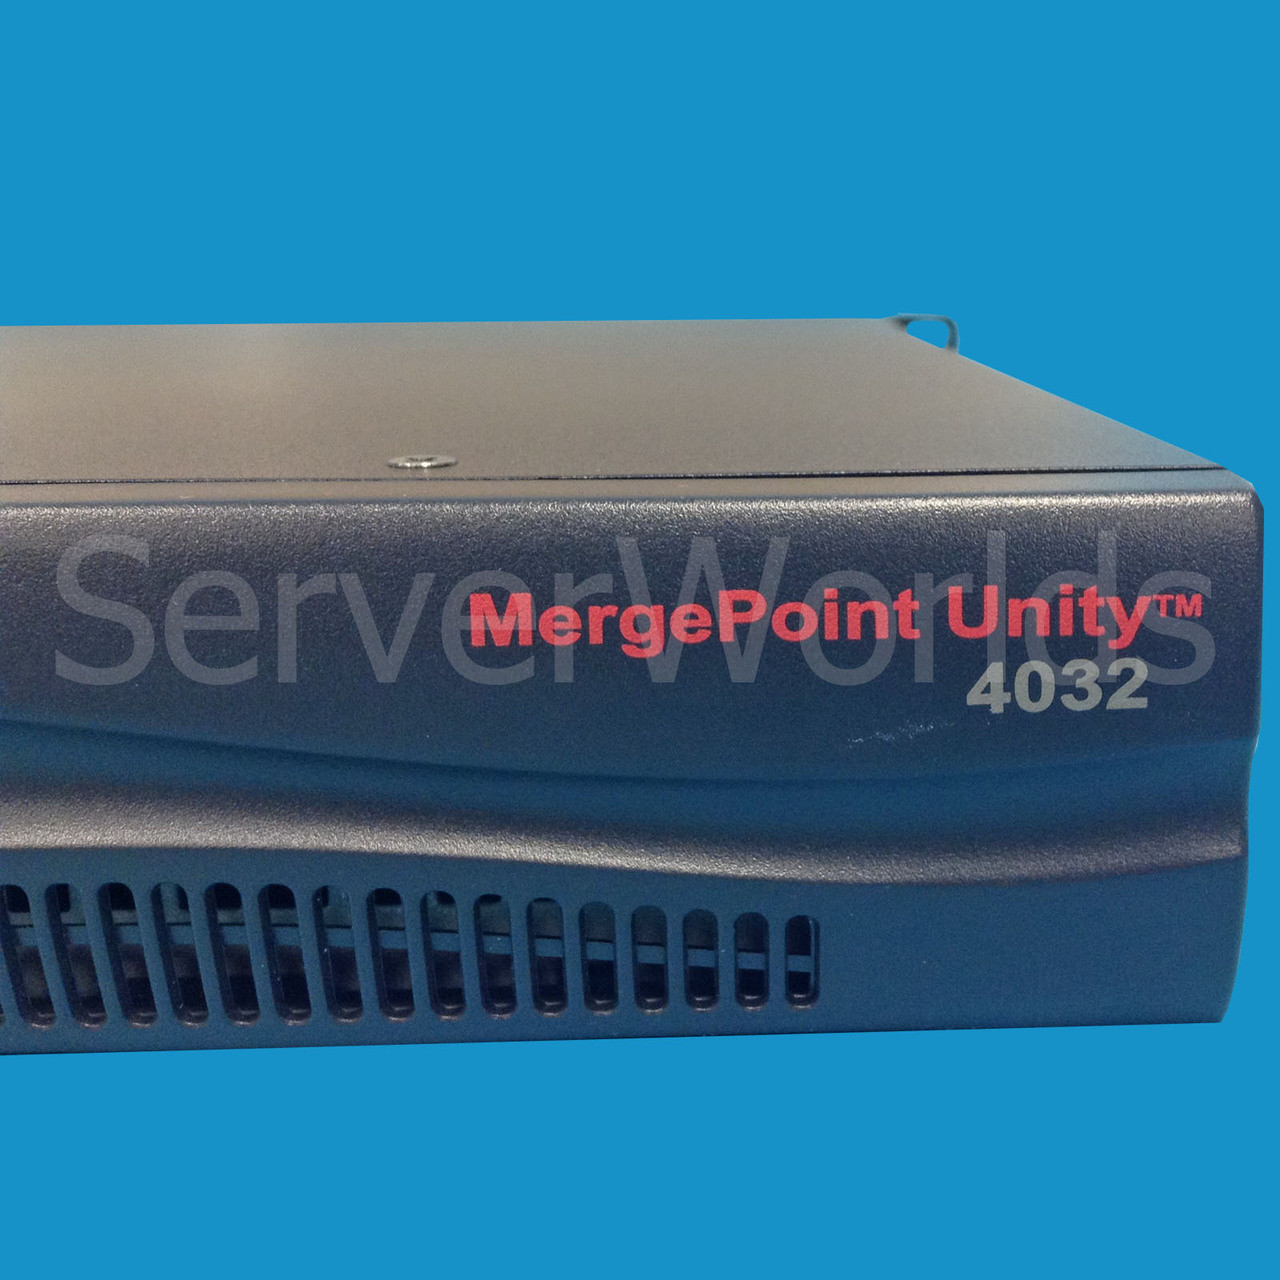 Refurbished Sun 371-4779 Avocent Mergepoint Unity 4032 520-596-508, MPU4032 Product ID